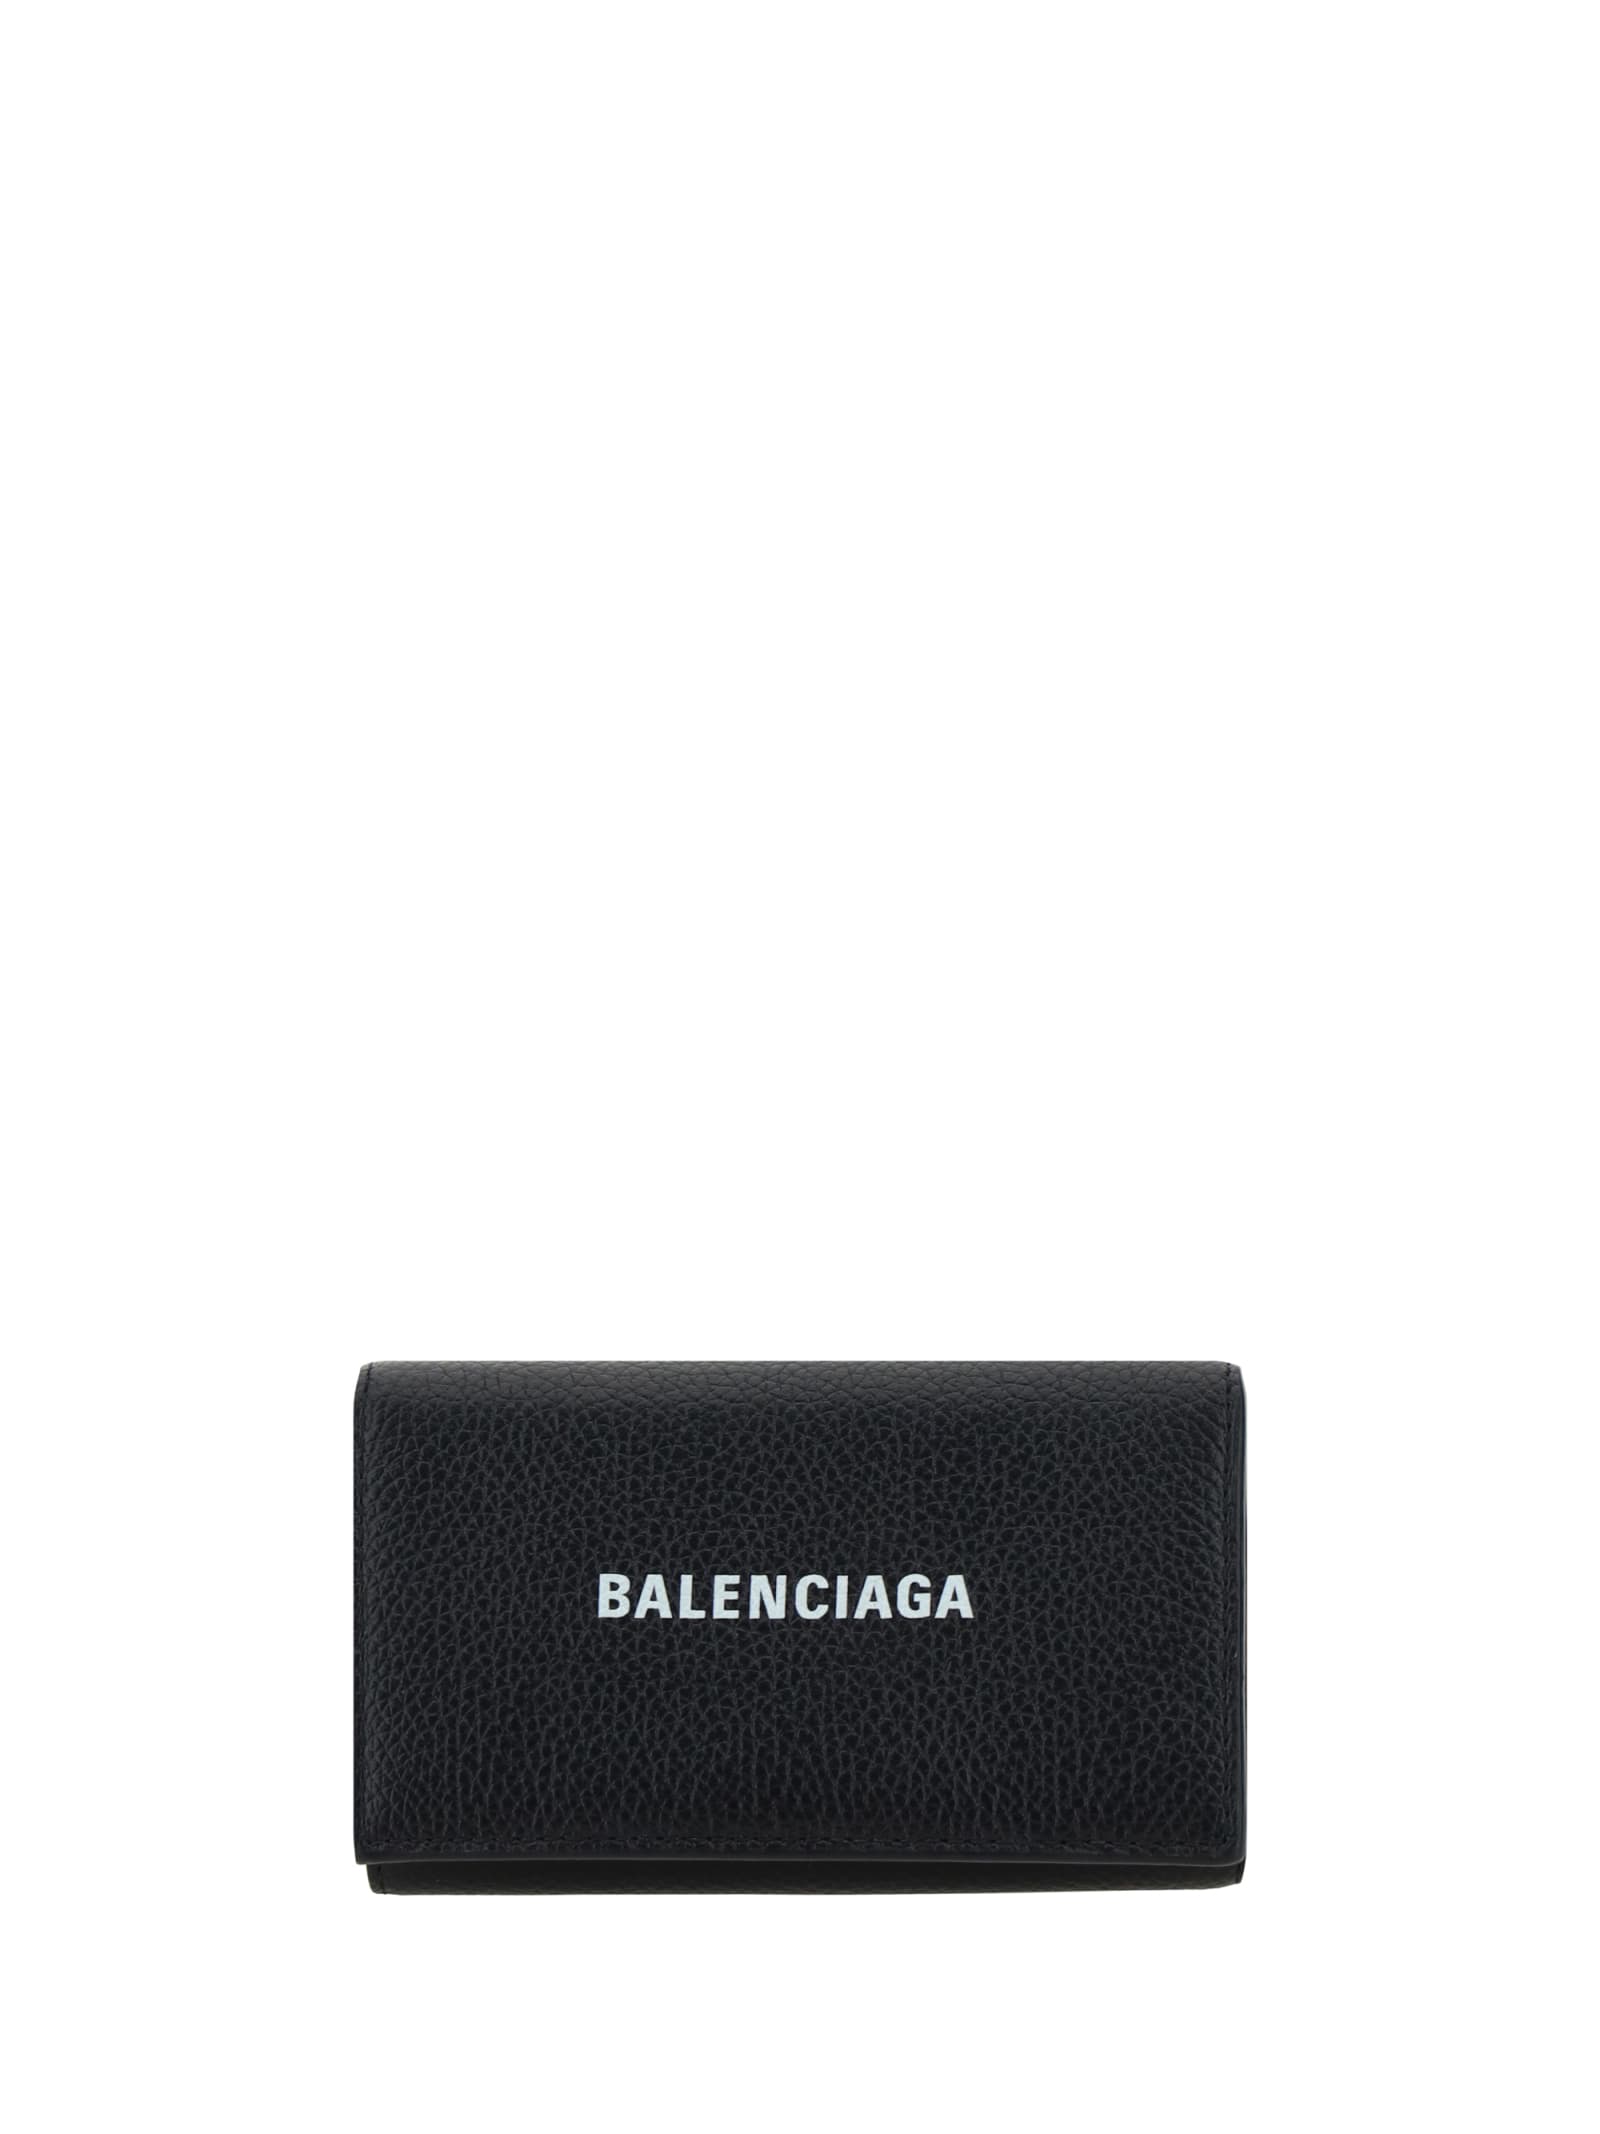 Balenciaga Key Ring In Black/white